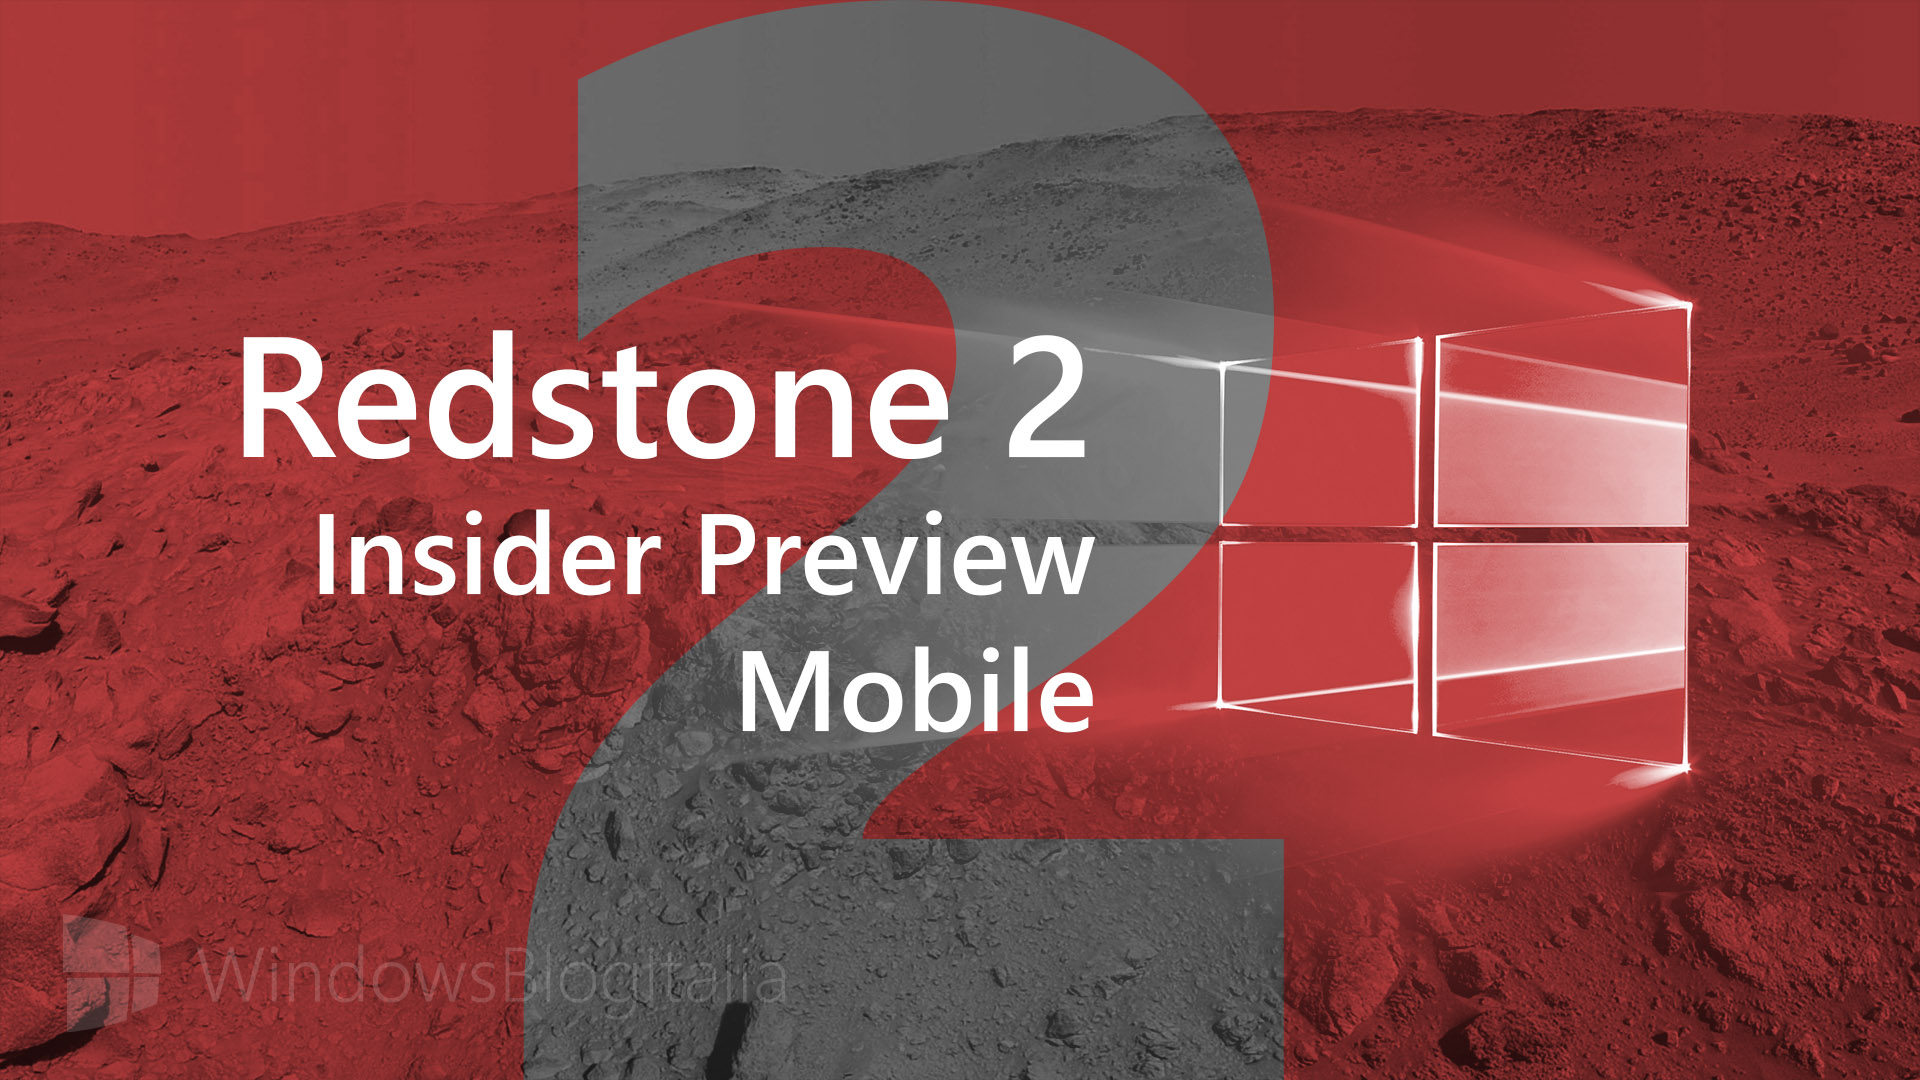 Redstone 2 mobile